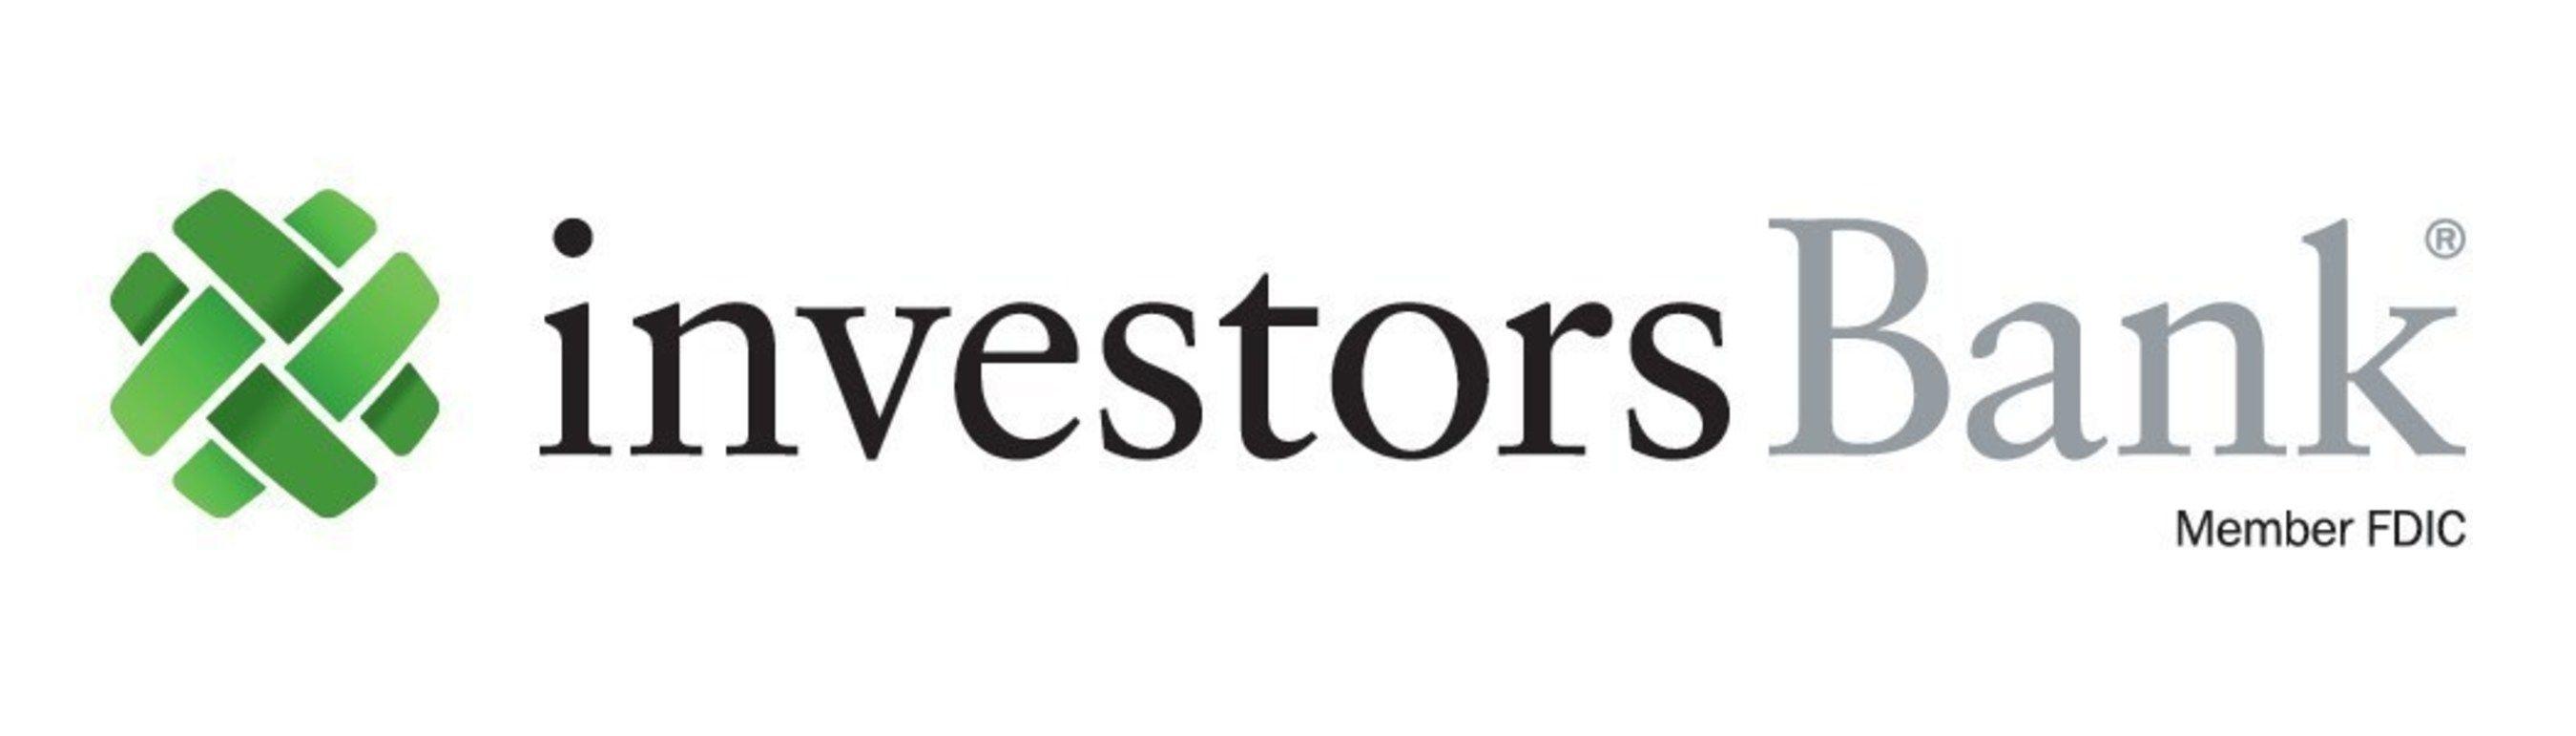 Investors Bank Logo - Investors Bank Hires New Treasurer